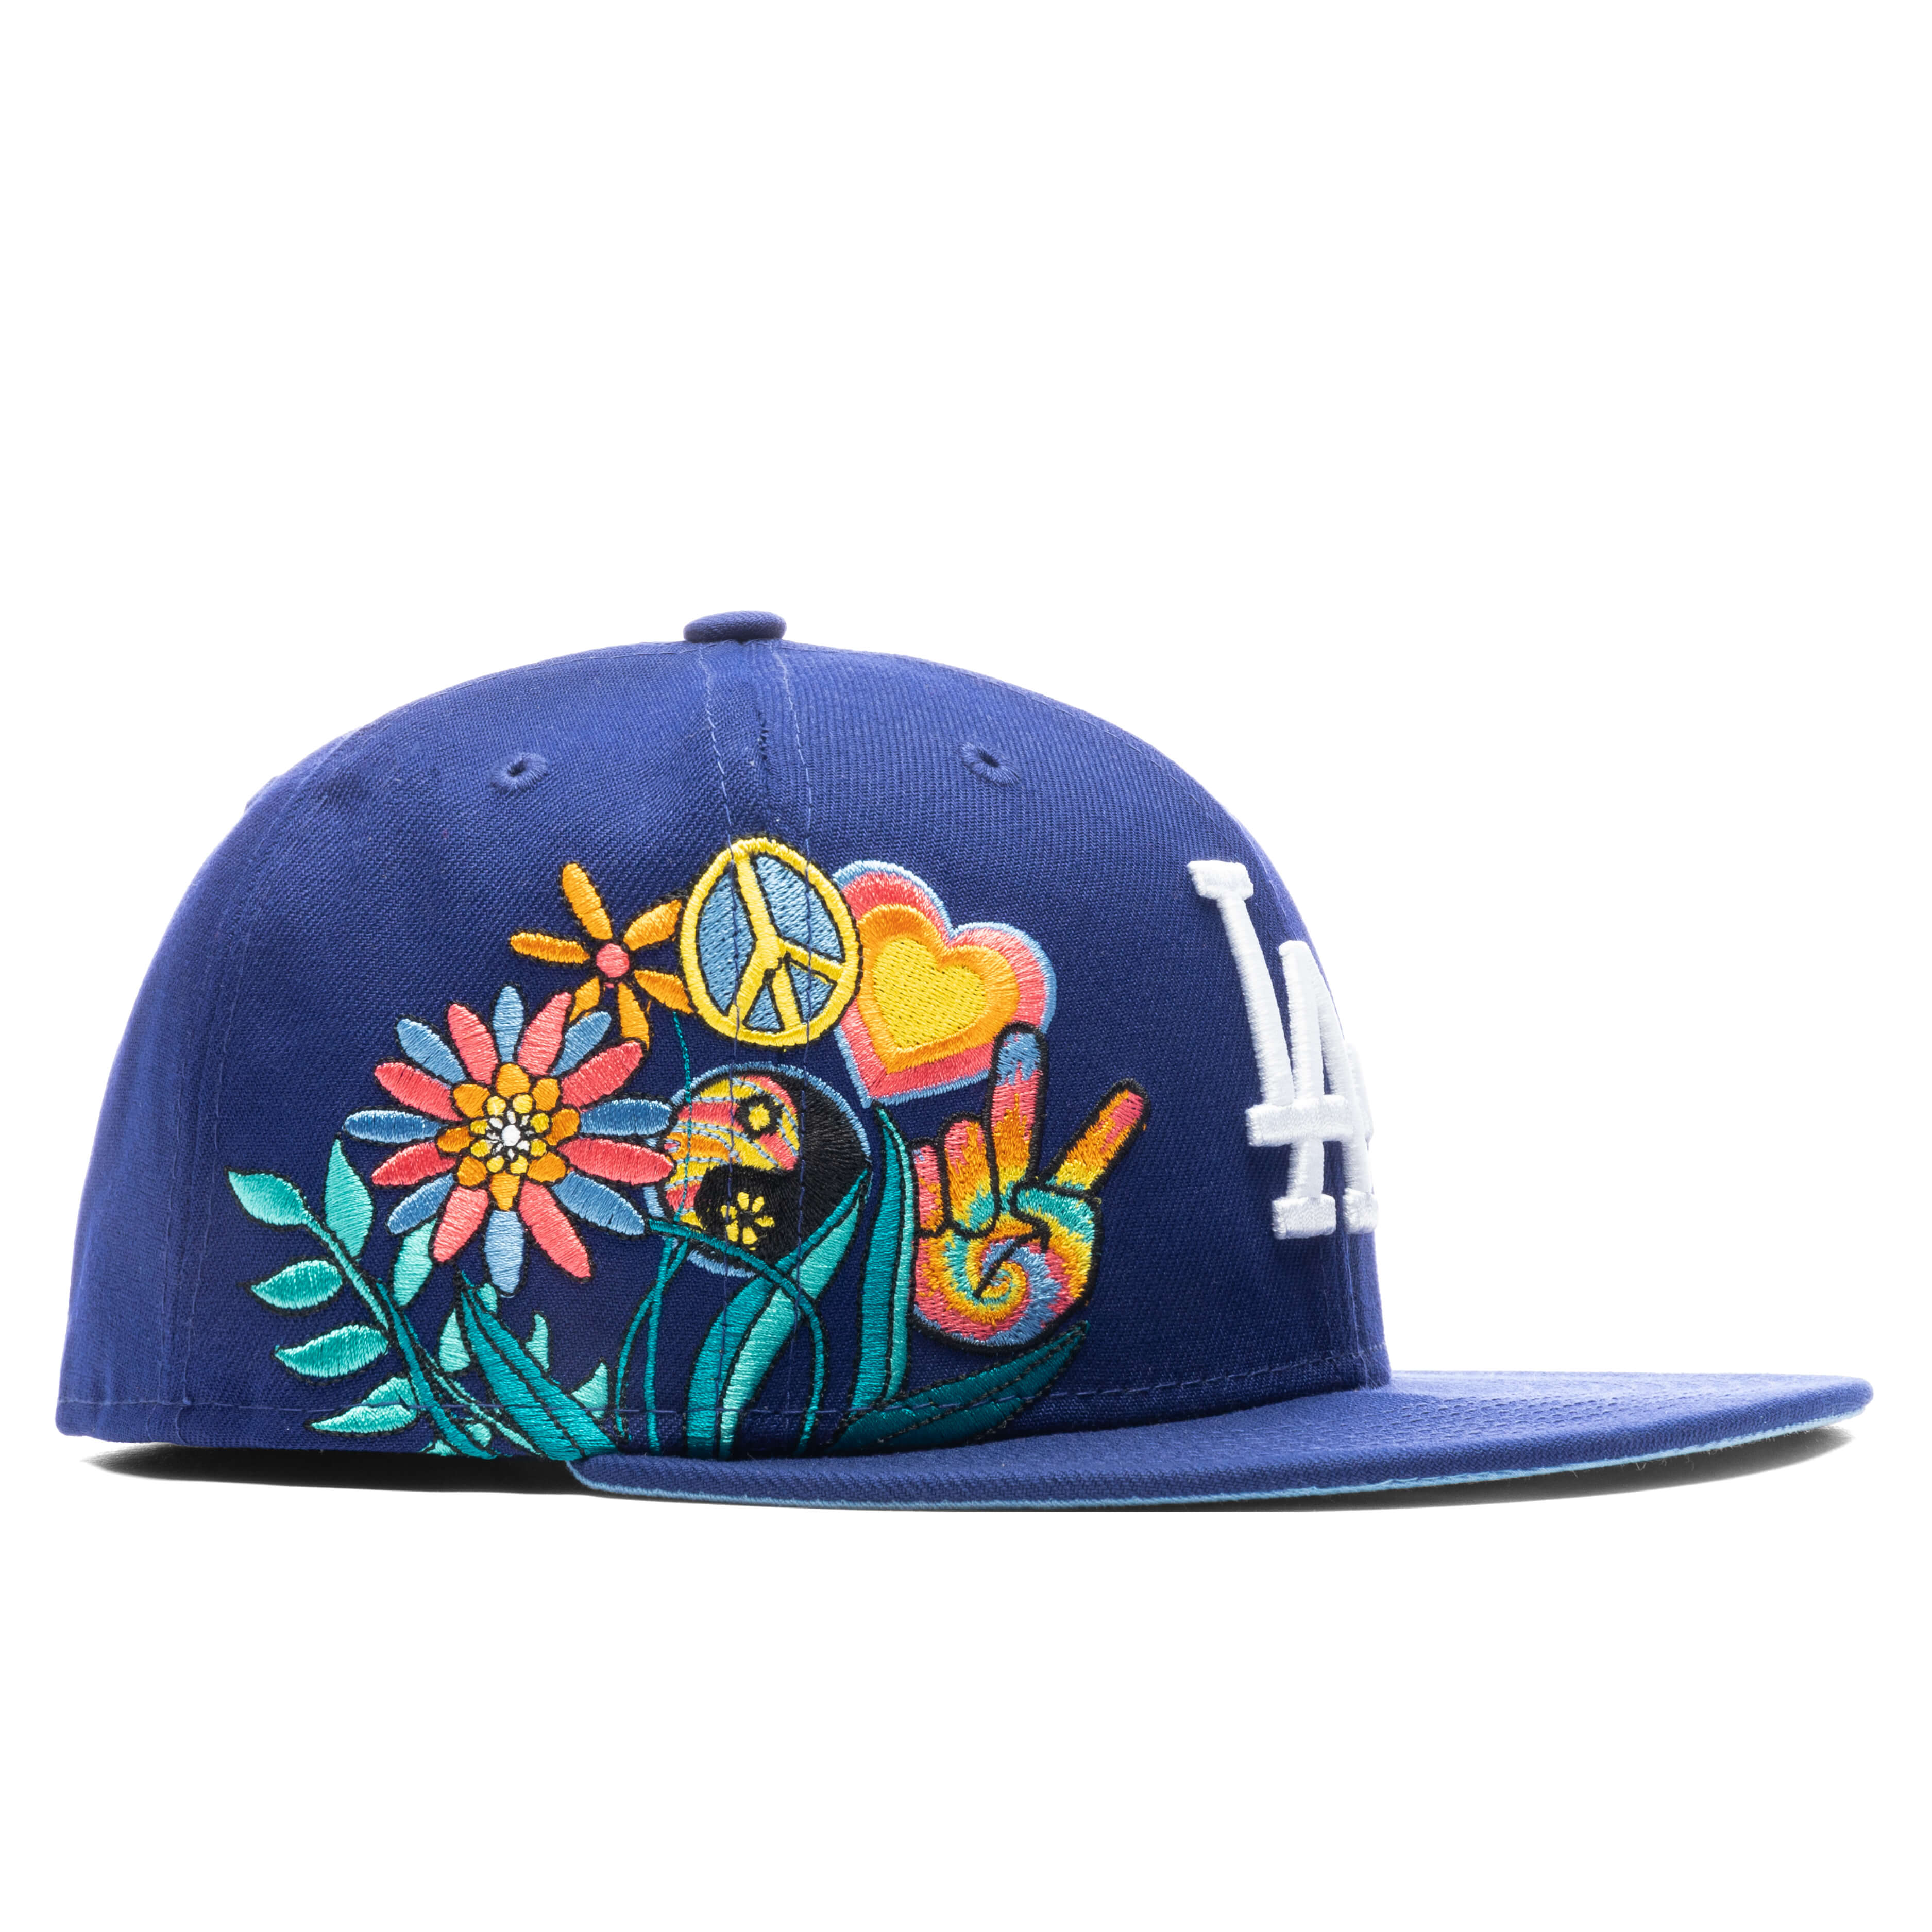 New Los Angeles Dodgers Guatemalan Heritage Night Shirt 9/4/22 